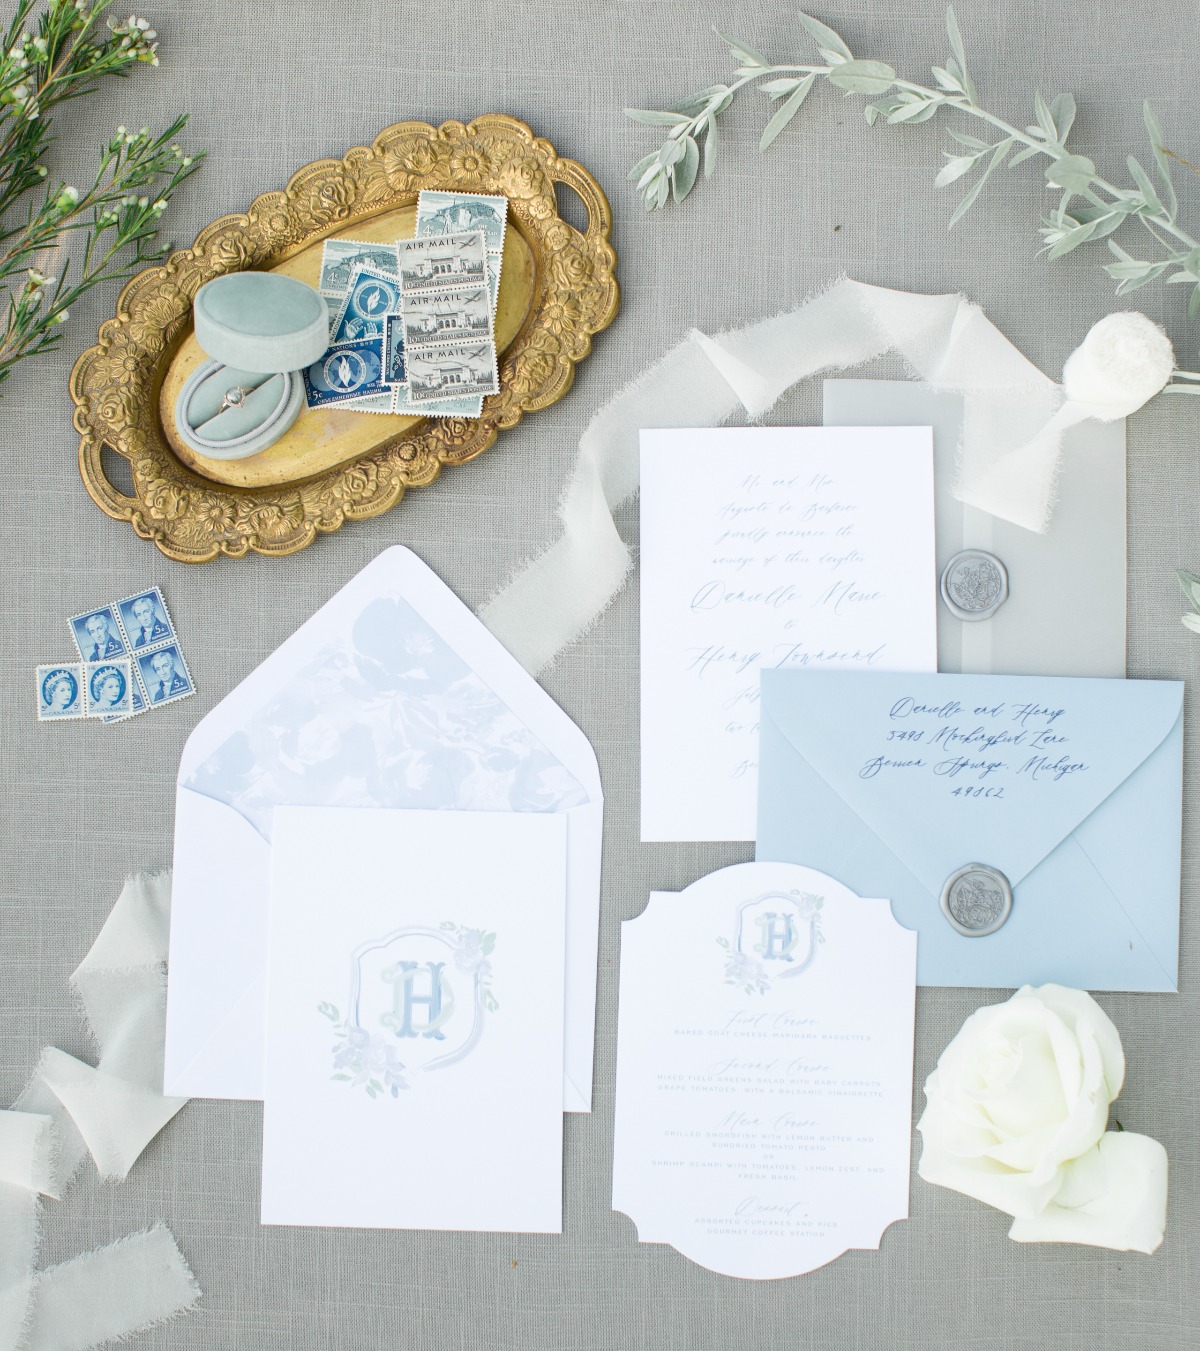 Blue and white invitation suite